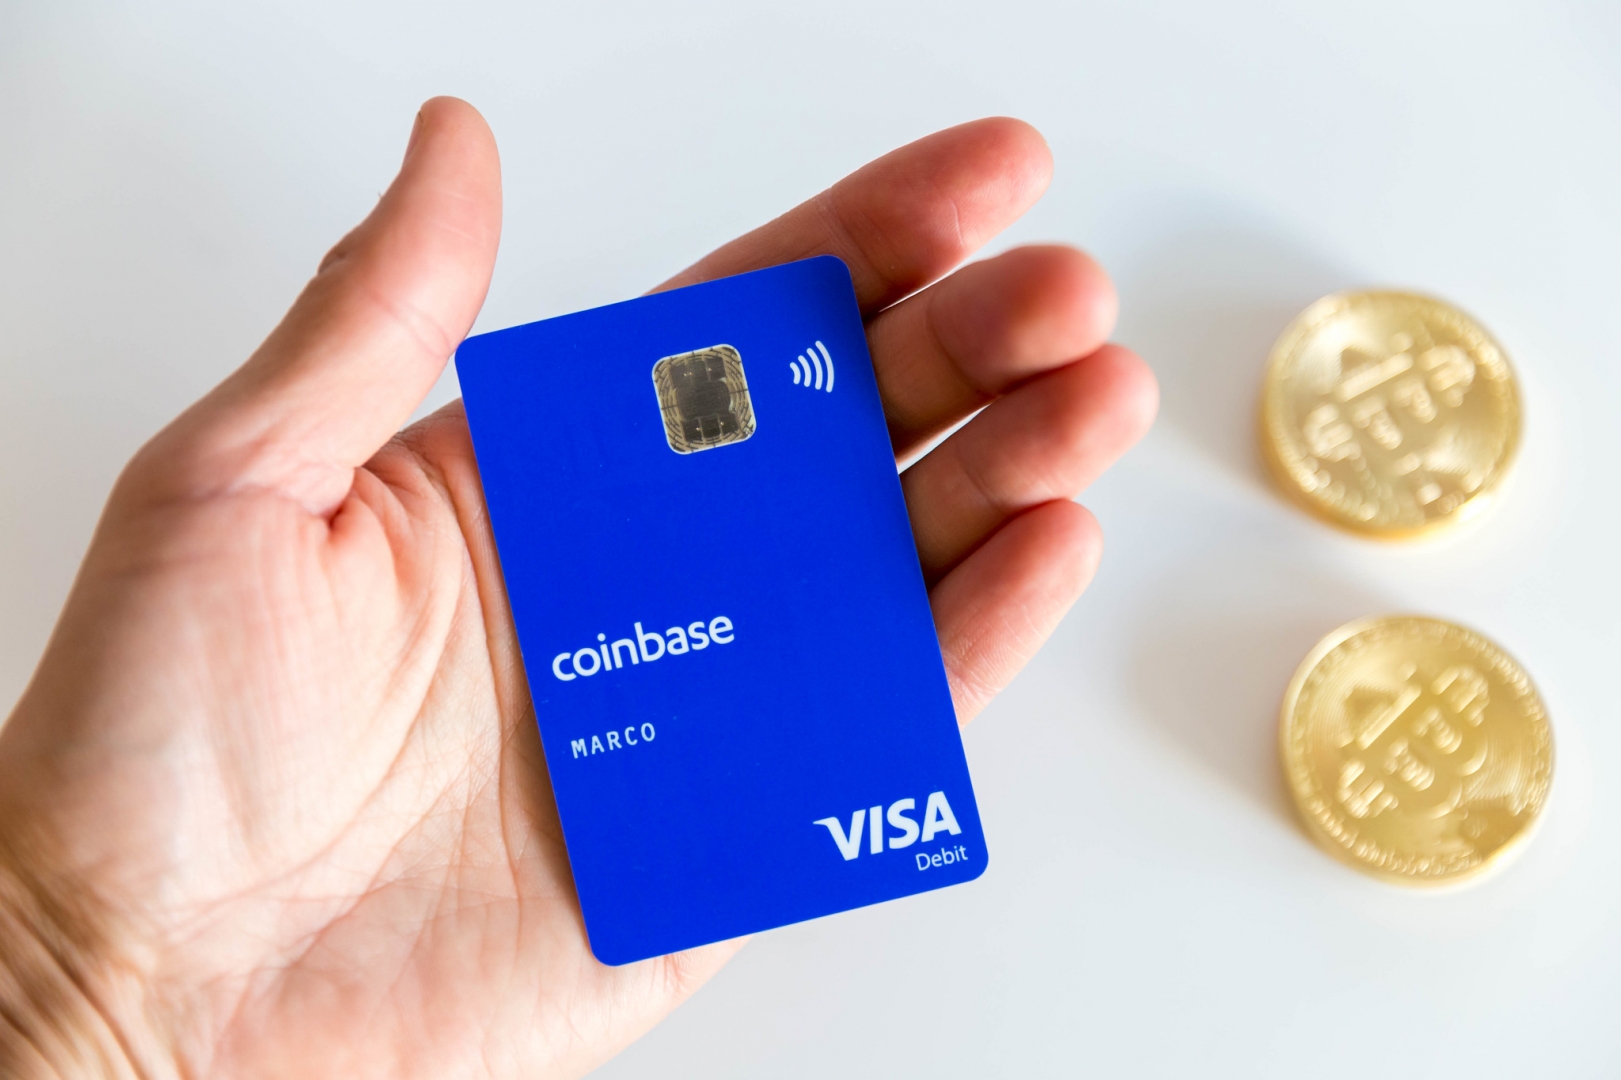 coinbase visa card fees